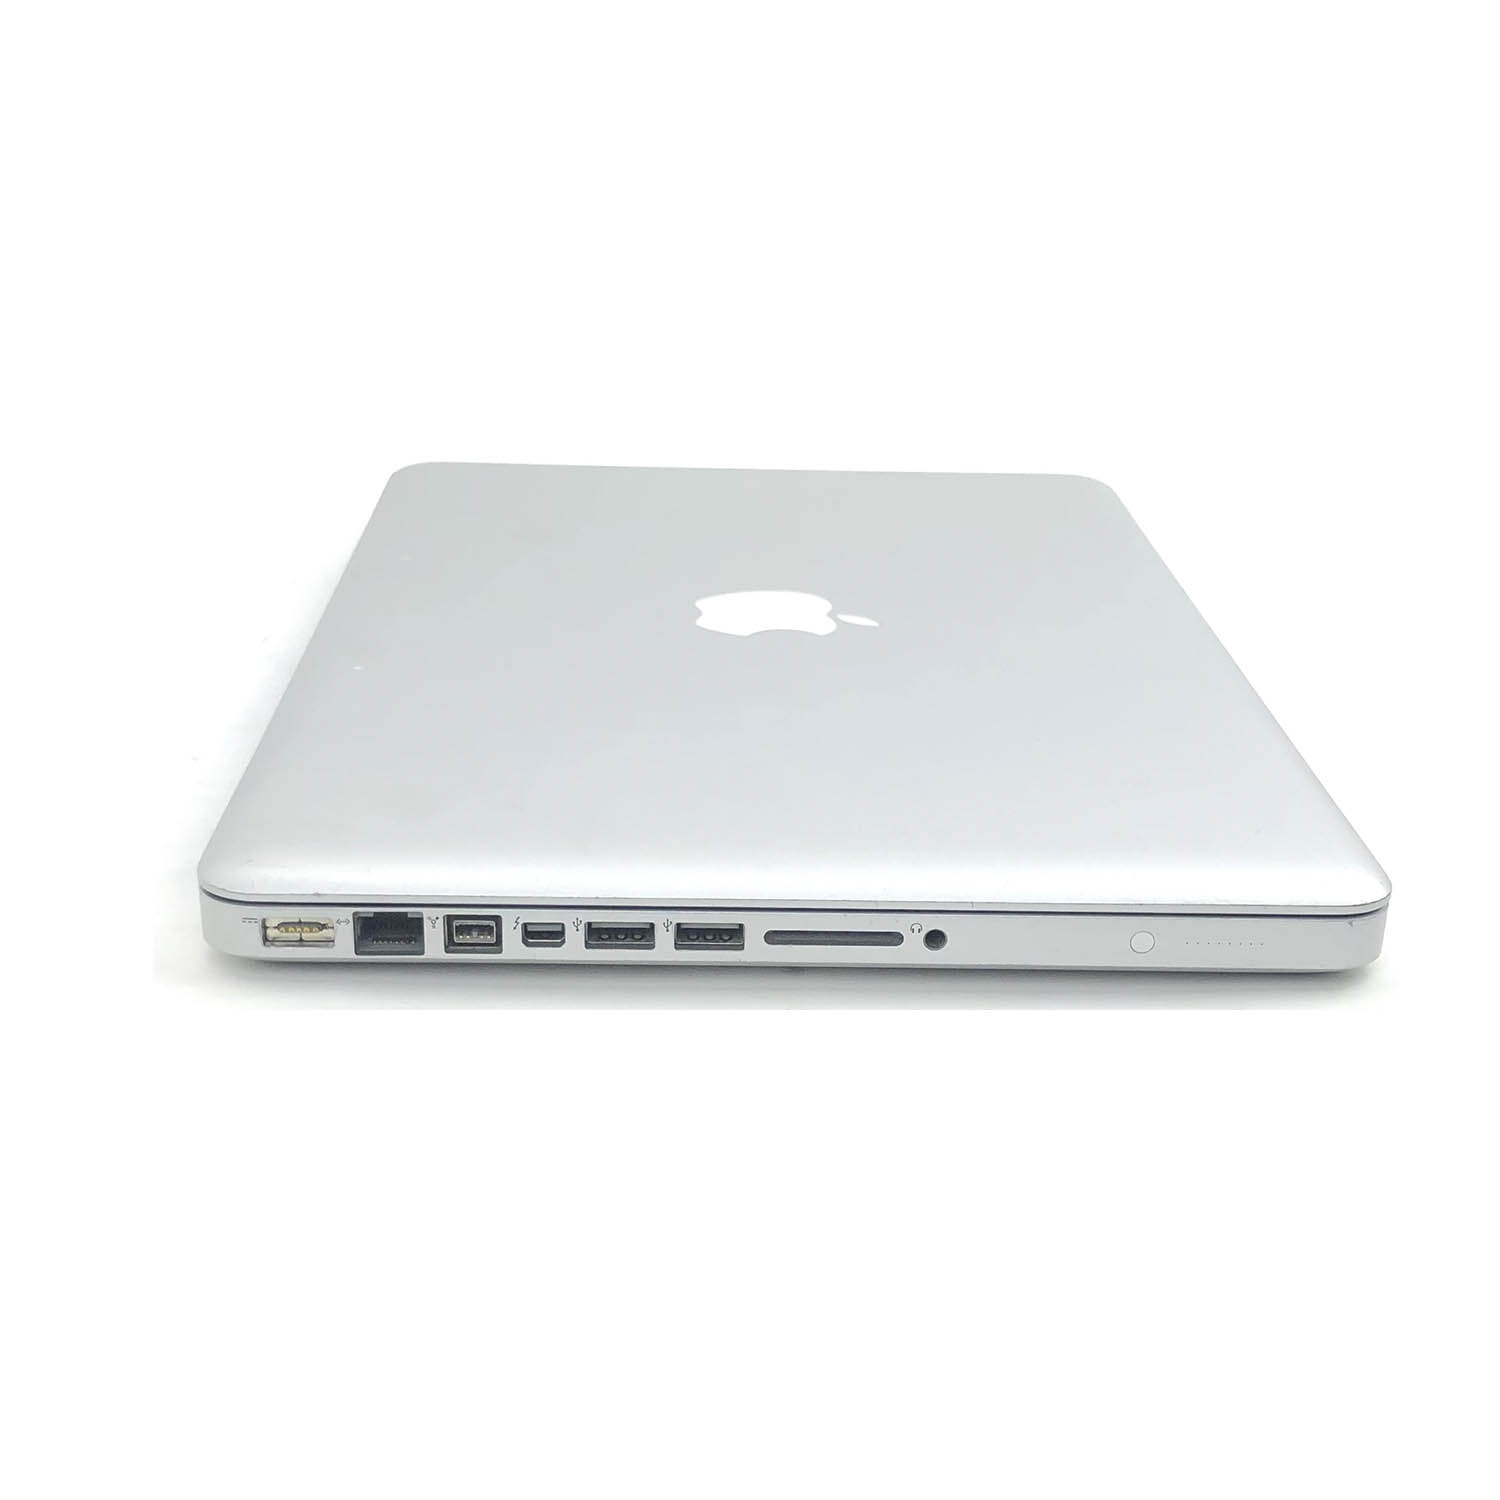 Macbook Pro 13 I5 2.5ghz 8GB 500GB SSD MD101LL/A  Seminovo